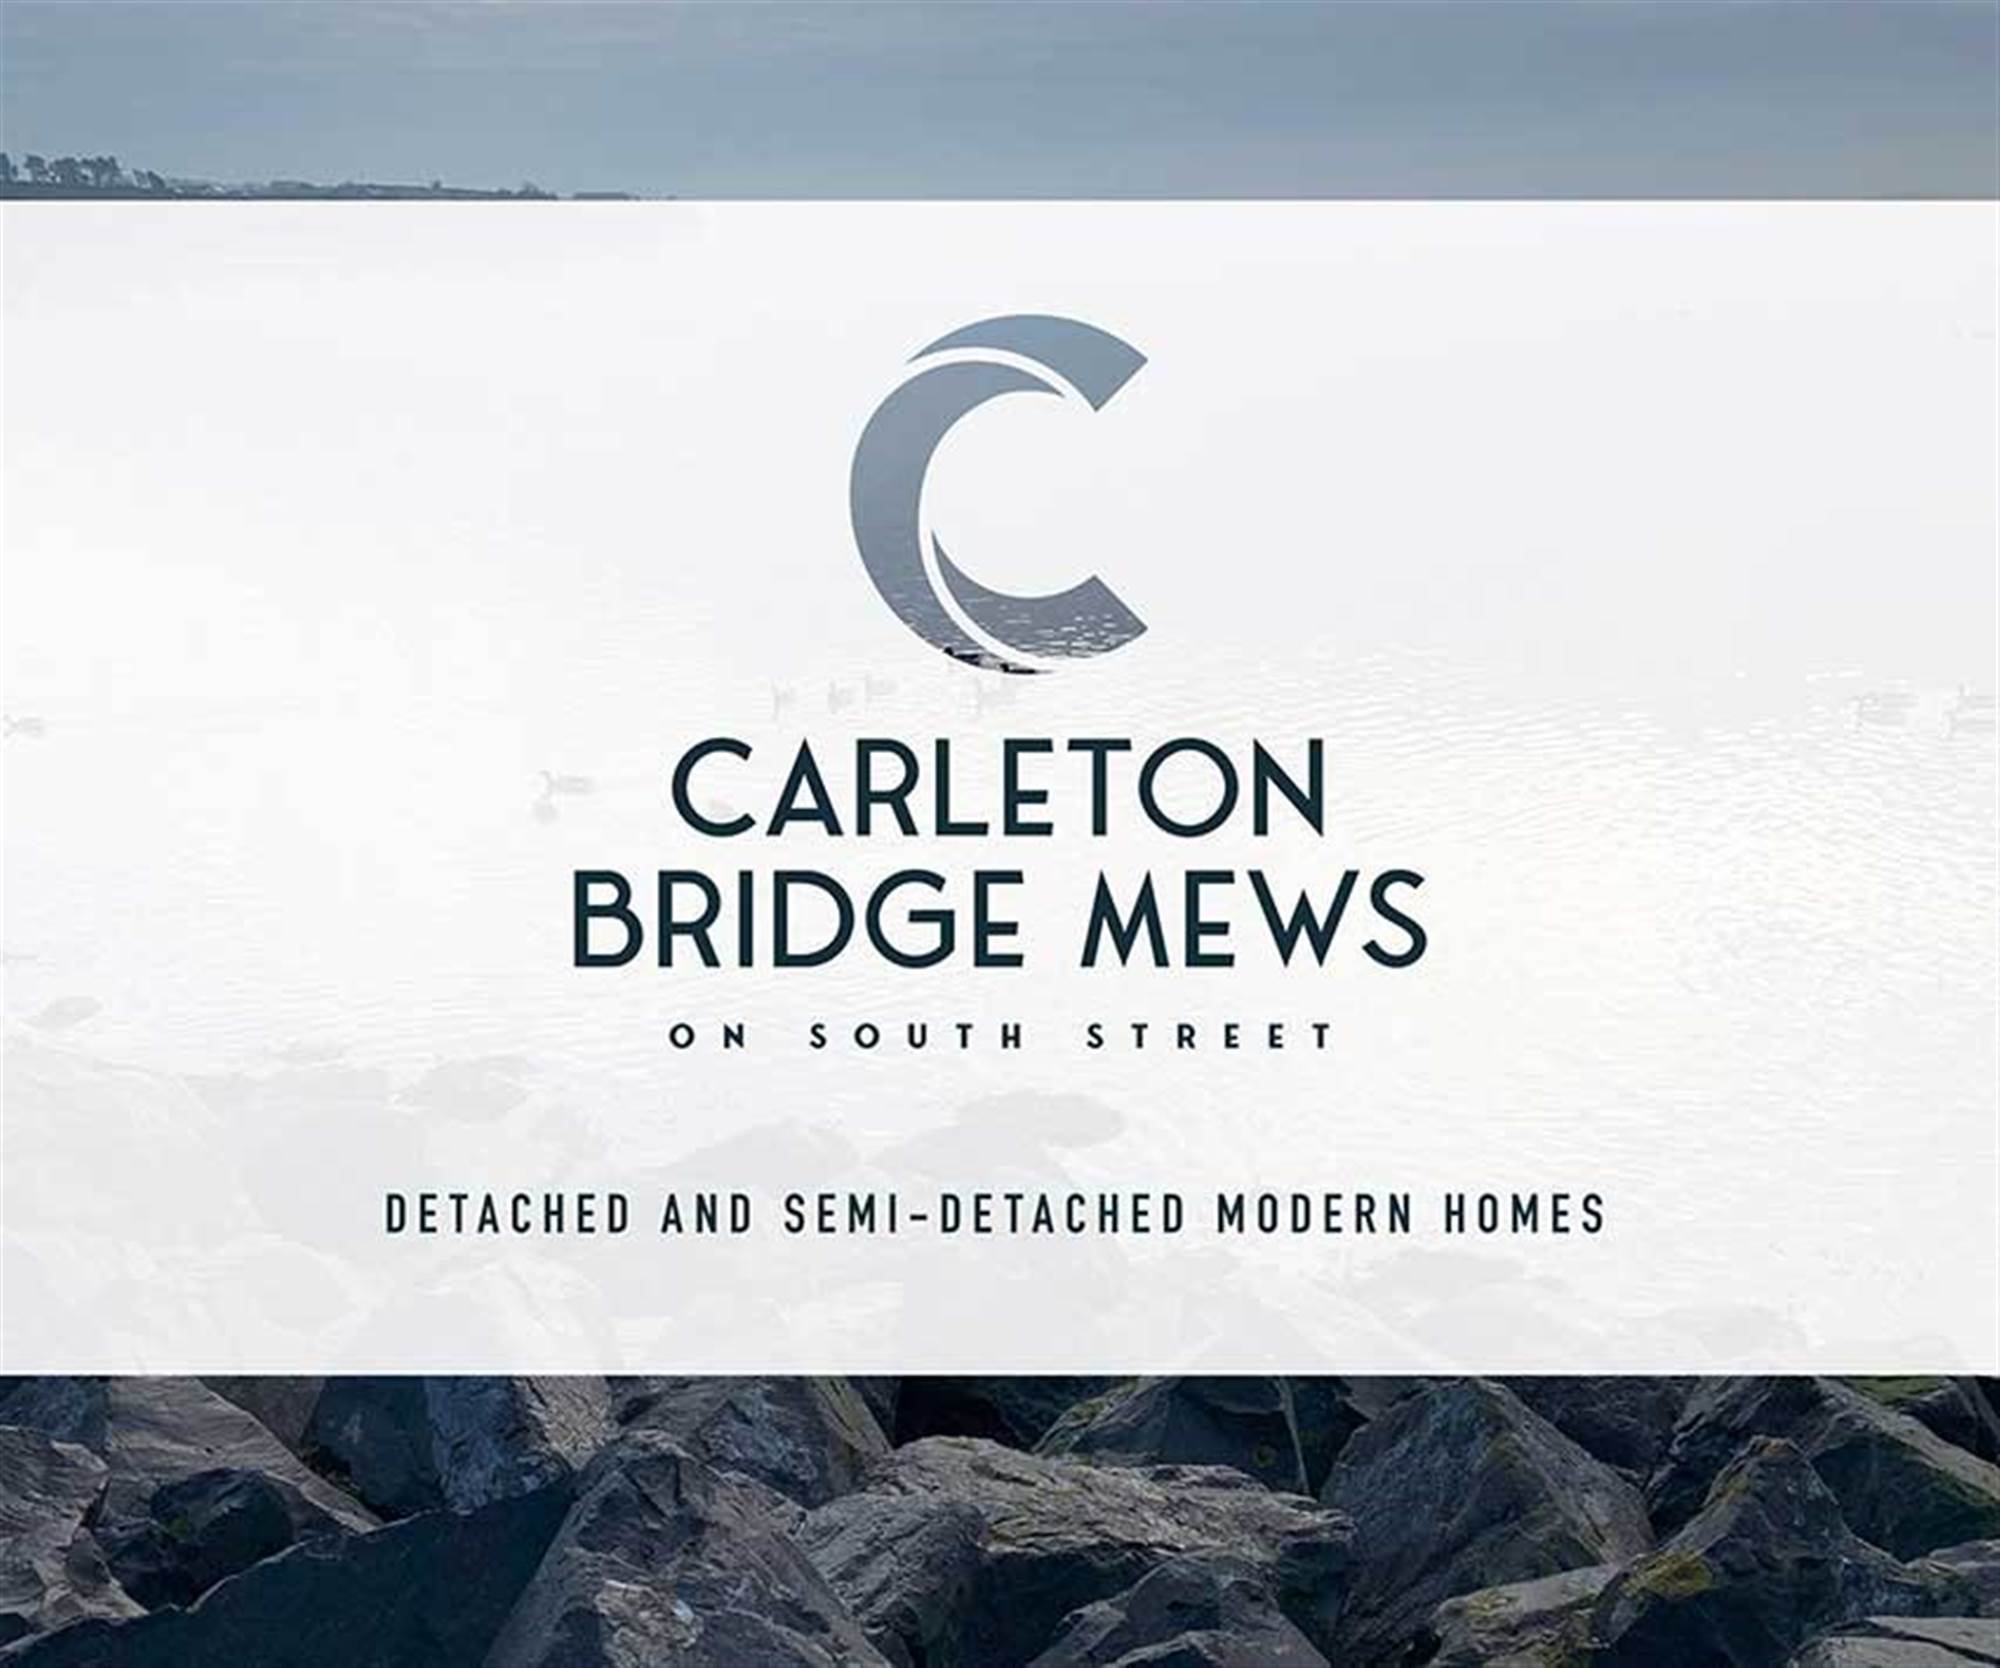 13 Carleton Bridge Mews